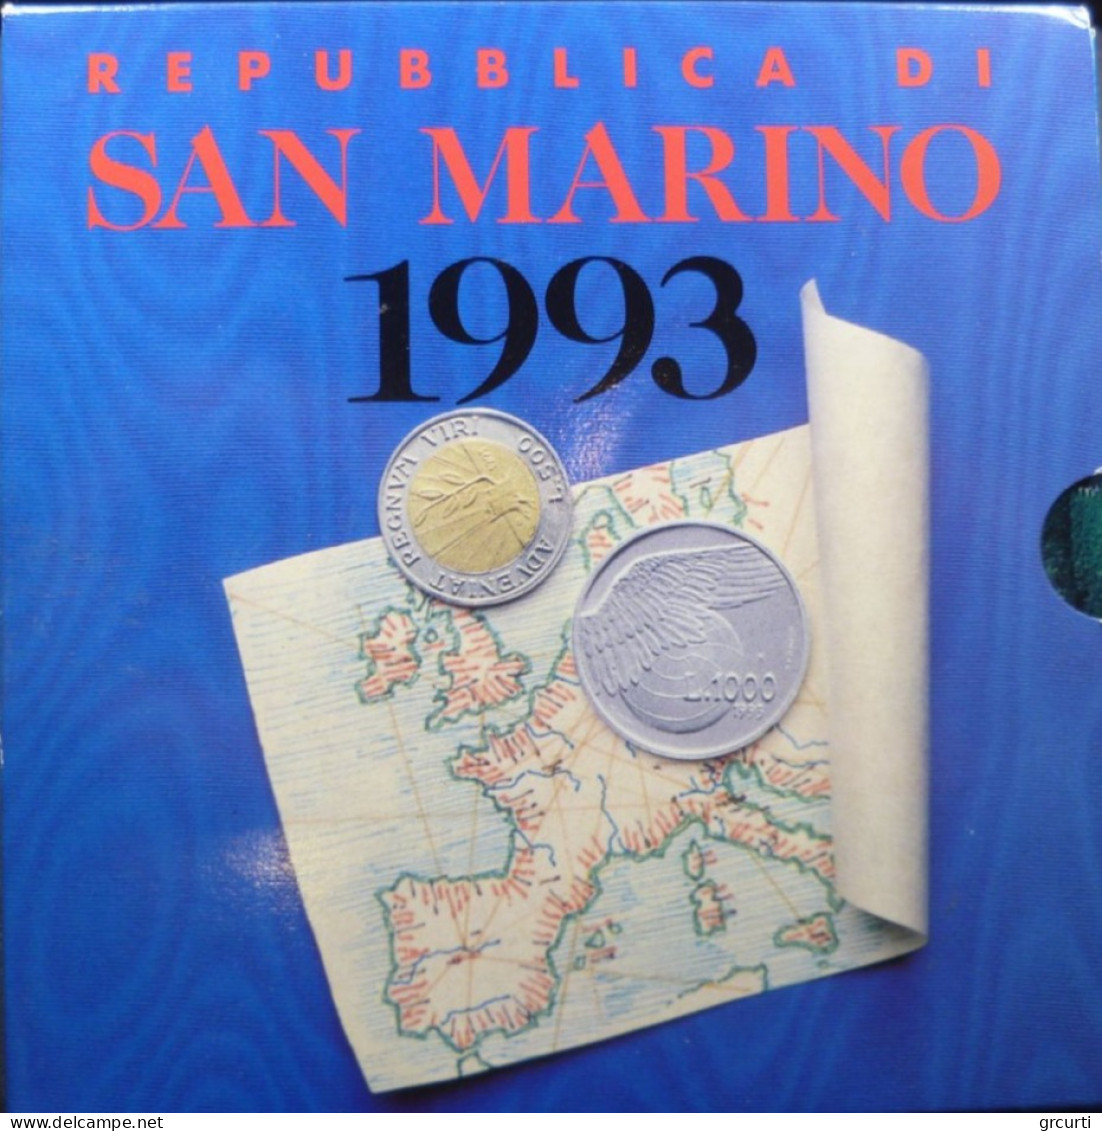 San Marino - 1993 - Serie Divisionale - Gig. 251 - San Marino